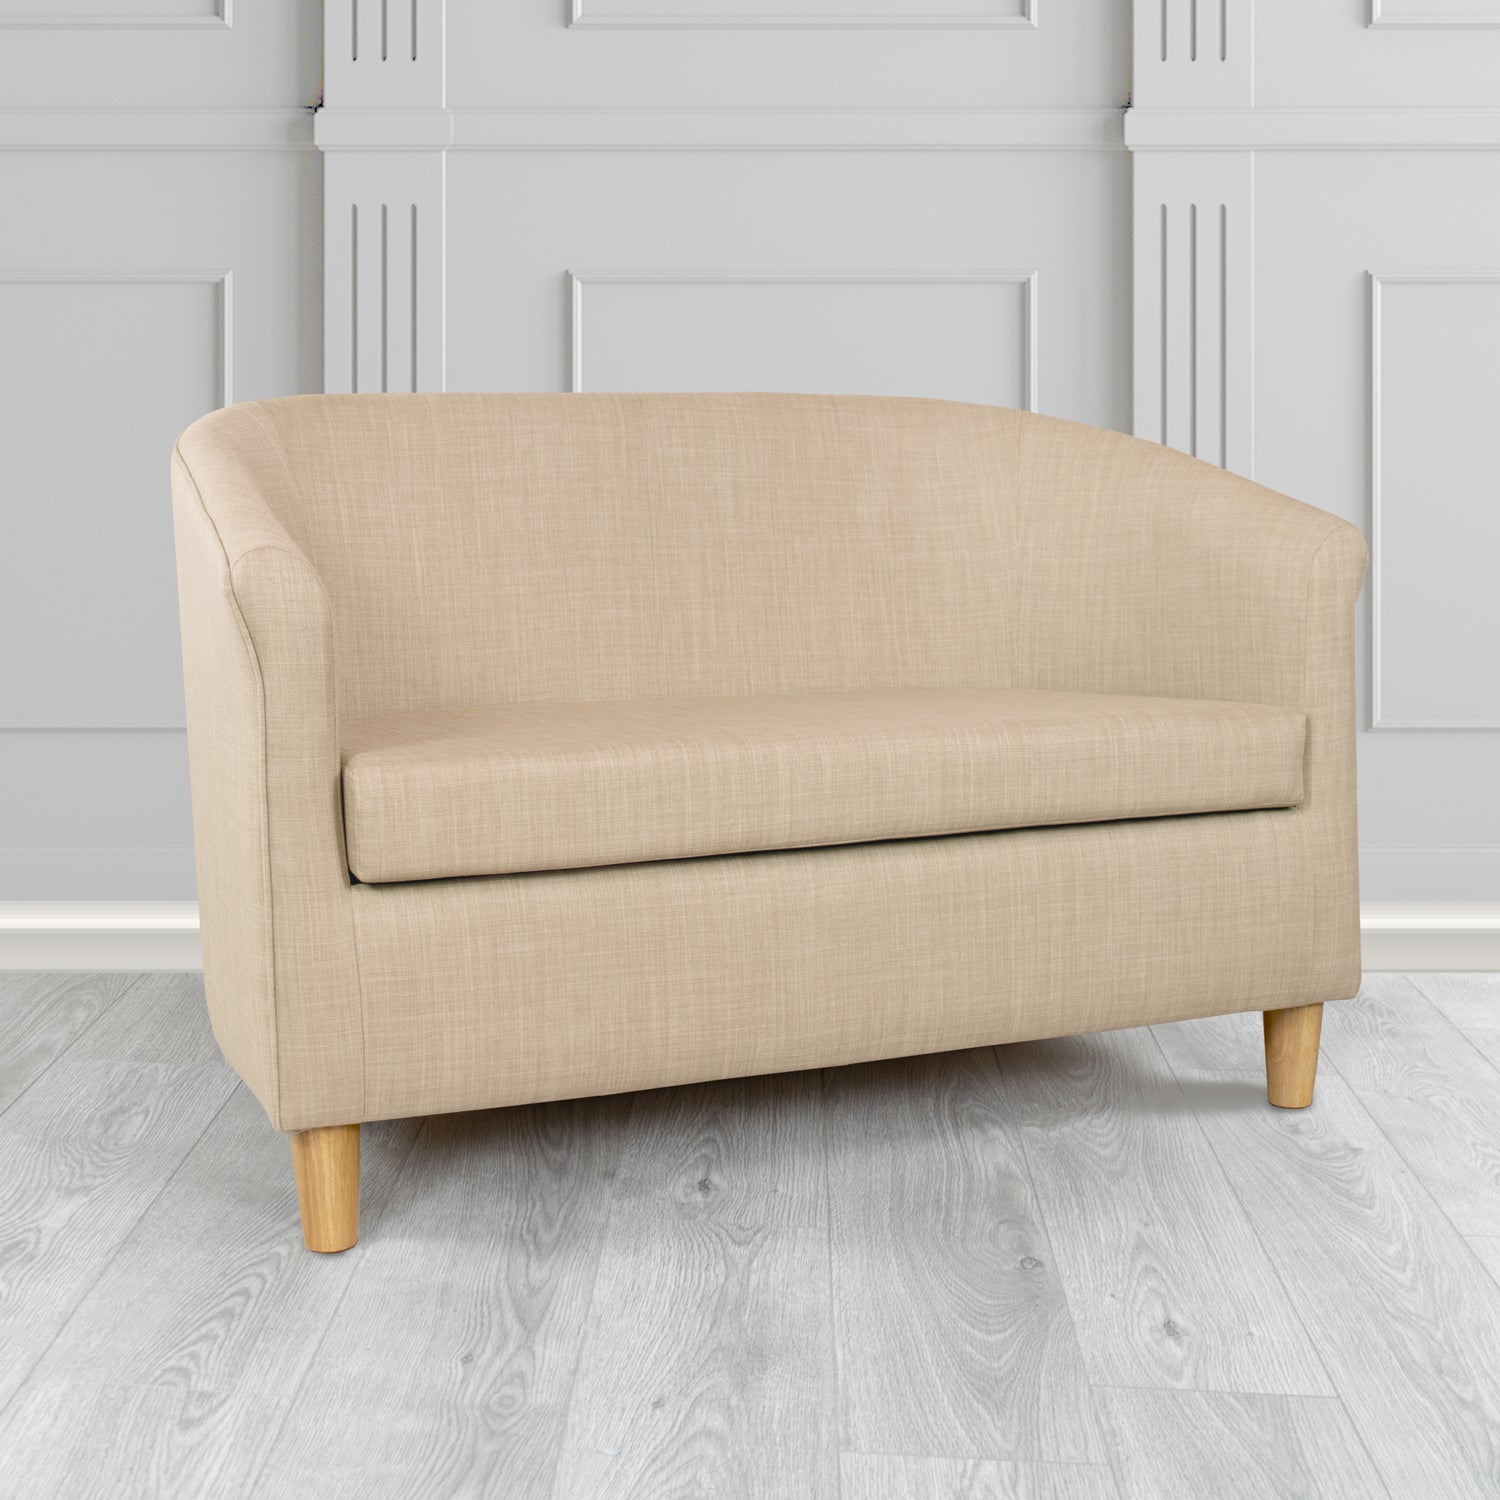 Tuscany Charles Sand Plain Linen Fabric 2 Seater Tub Sofa - The Tub Chair Shop